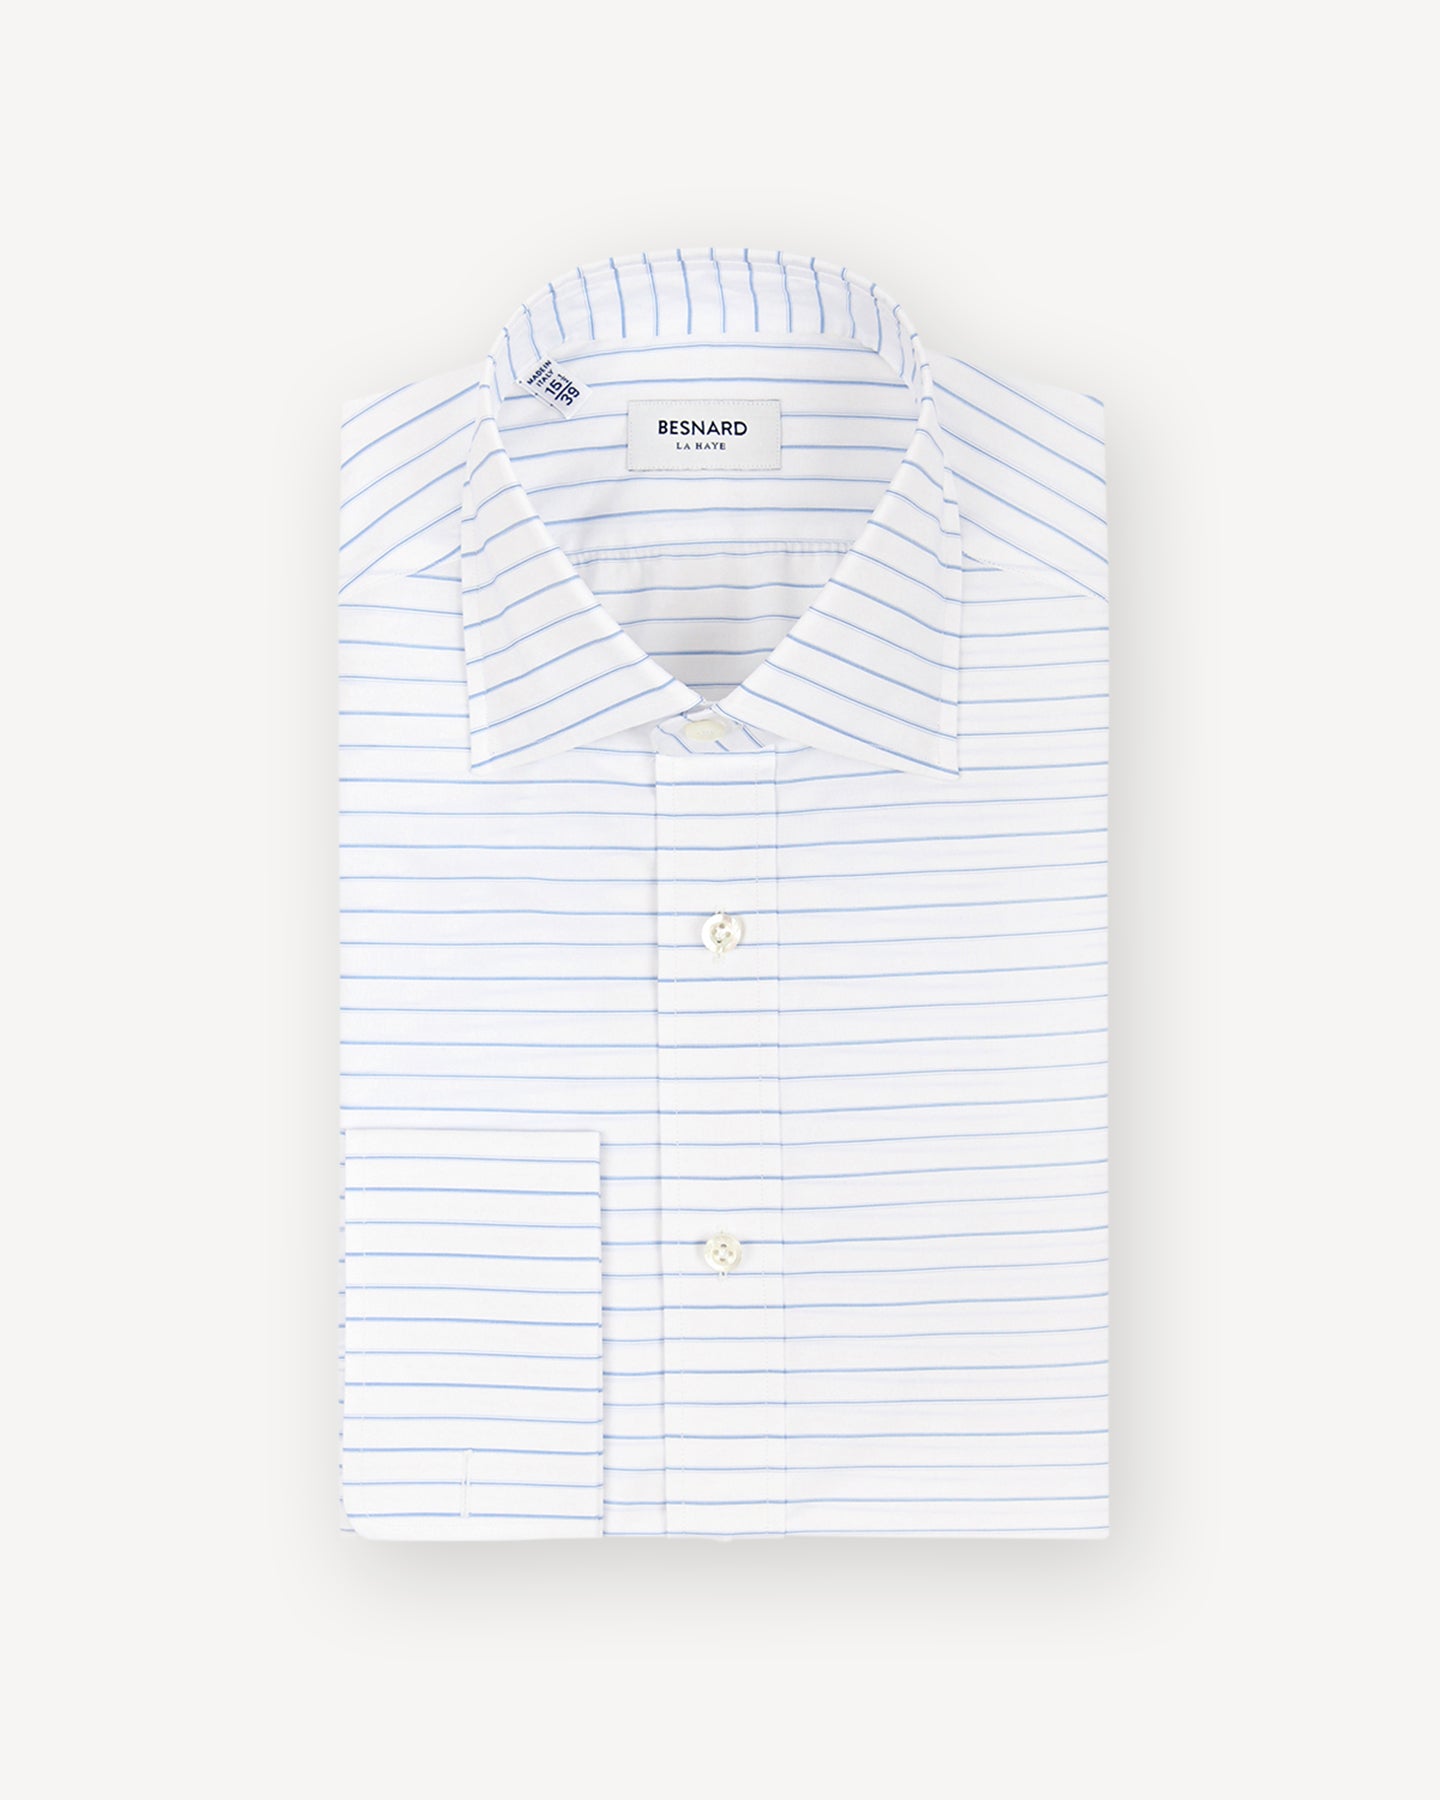 Horizontal stripe shirt as worn by Gordon Gekko in Wall Street